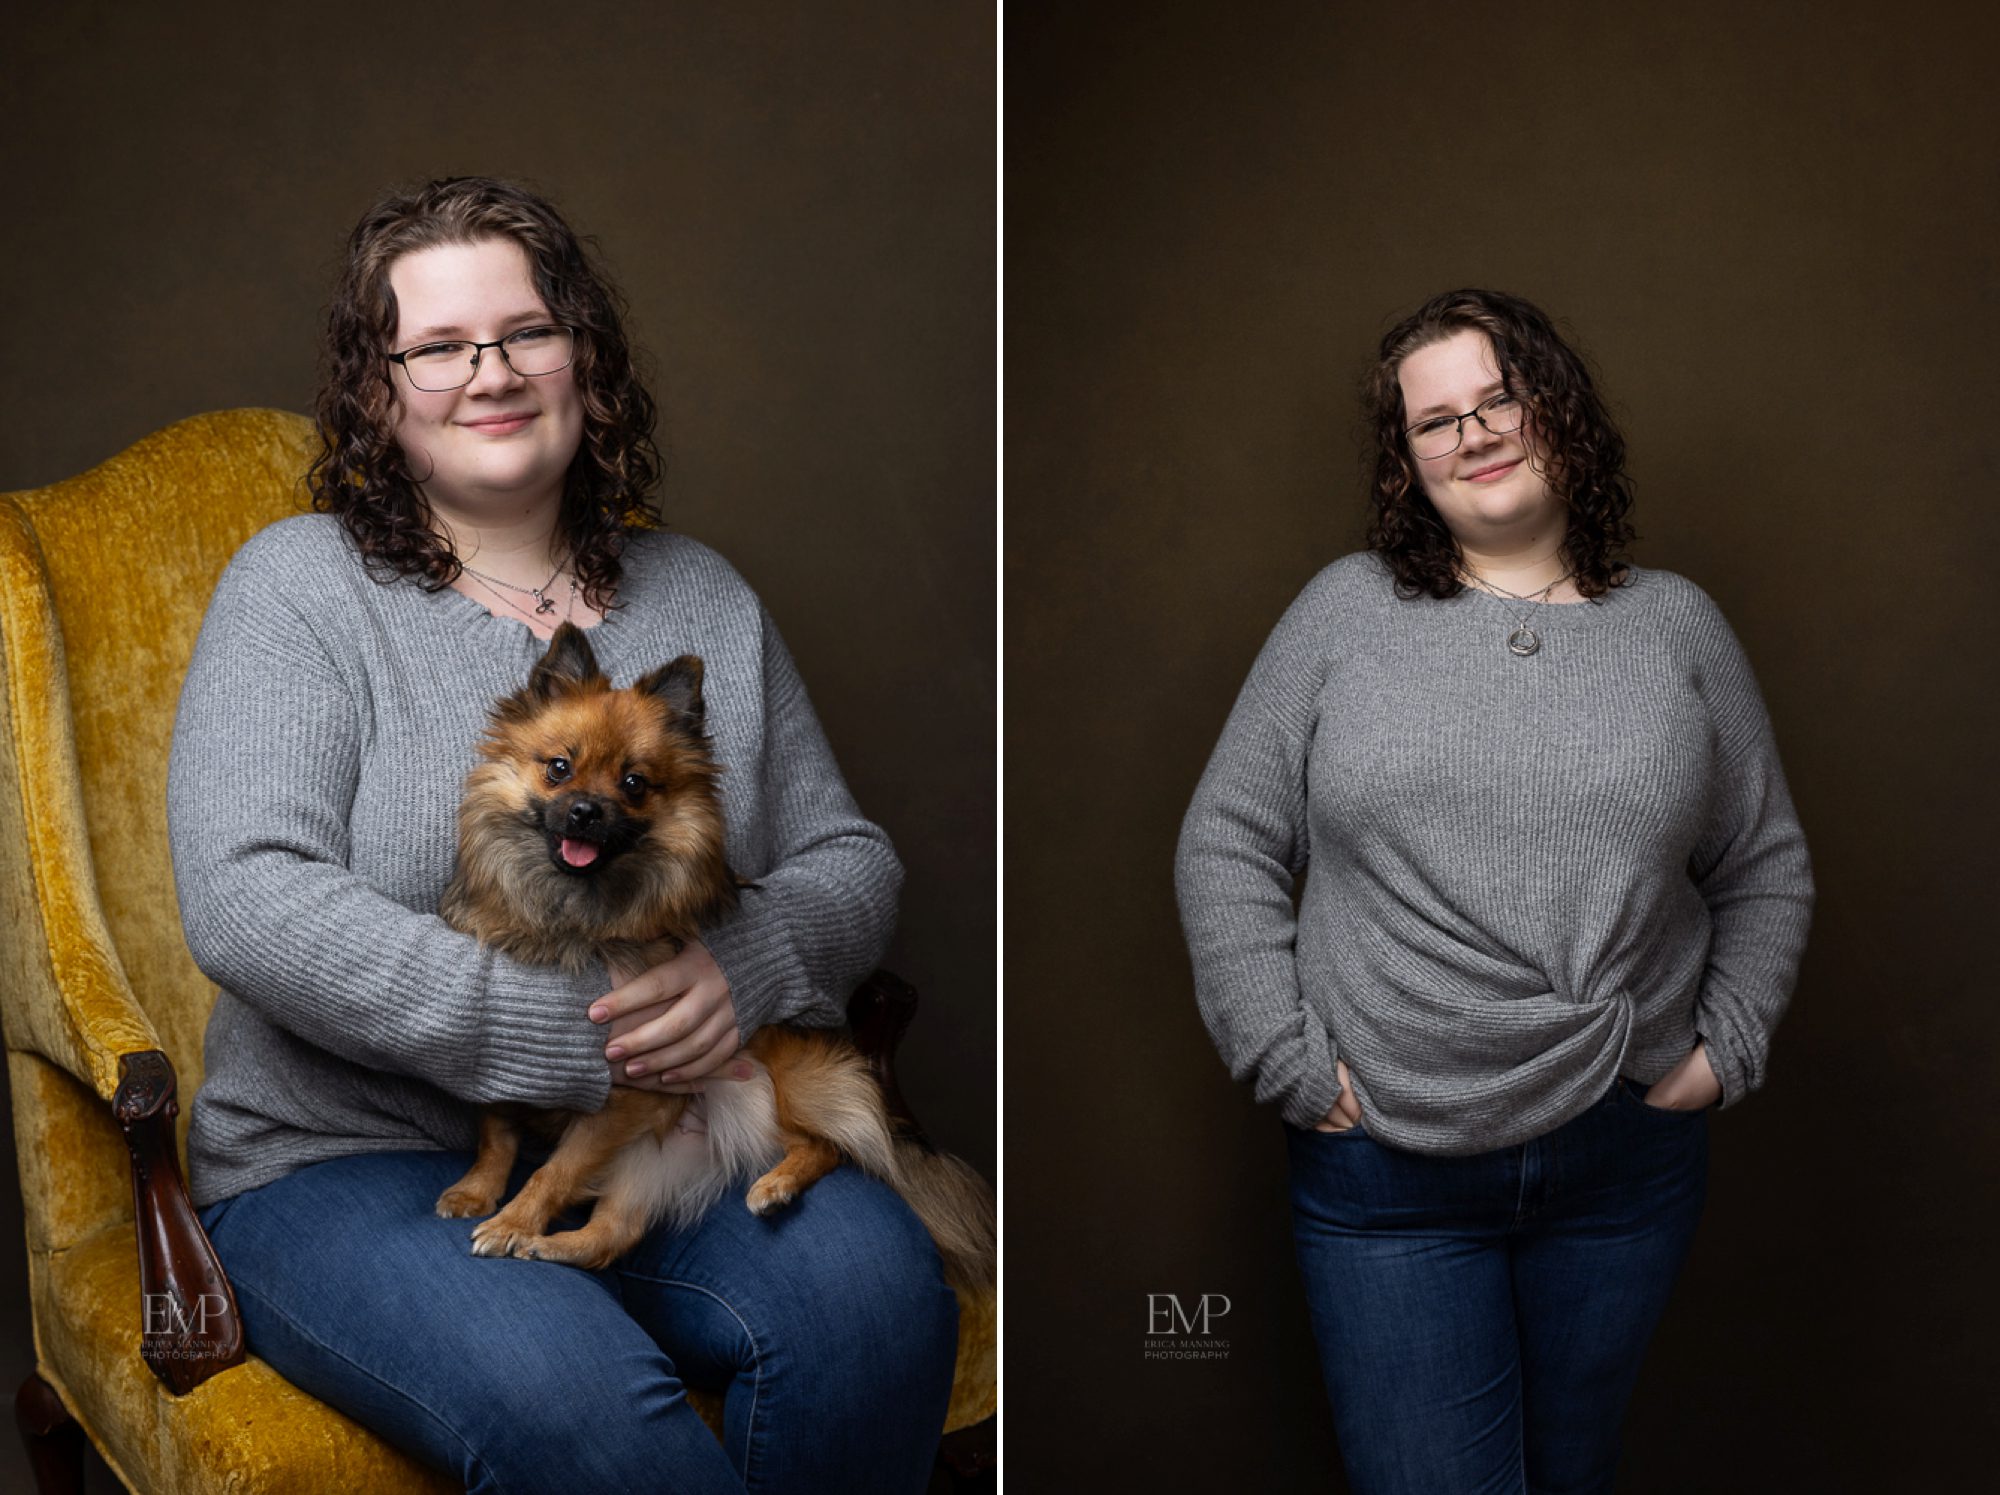 Studio portrait of high school senior girl and her dog